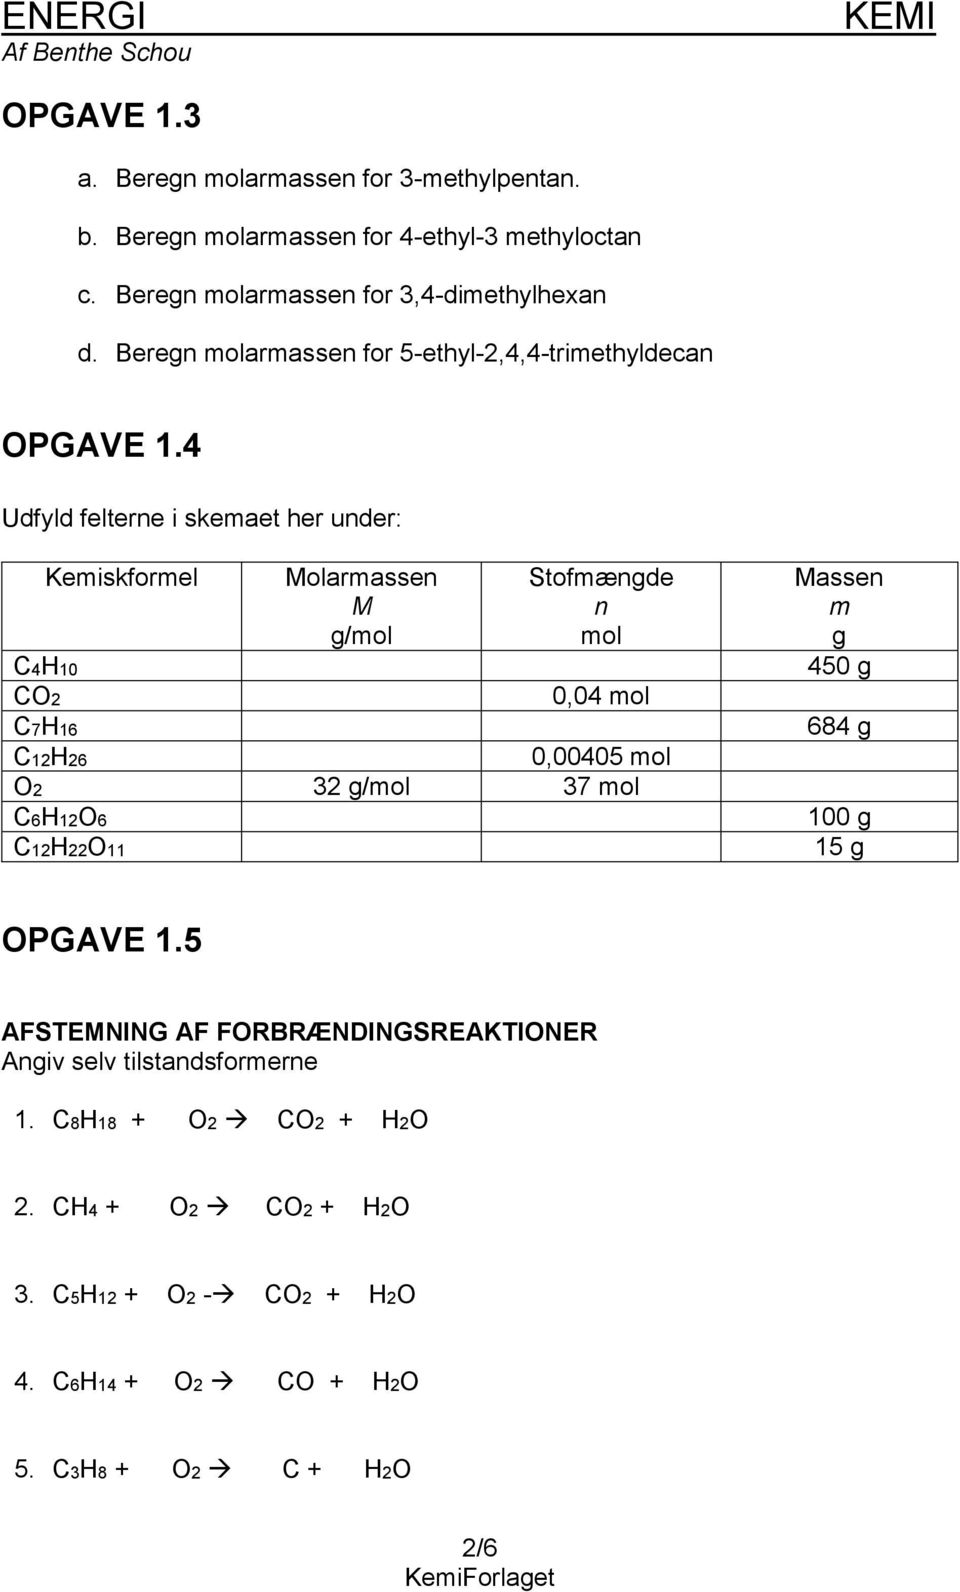 4 Udfyld felterne i skemaet her under: Kemiskformel C4H10 CO2 C7H16 Molarmassen M g/mol Stofmængde n mol 0,04 mol C12H26 0,00405 mol O2 32 g/mol 37 mol